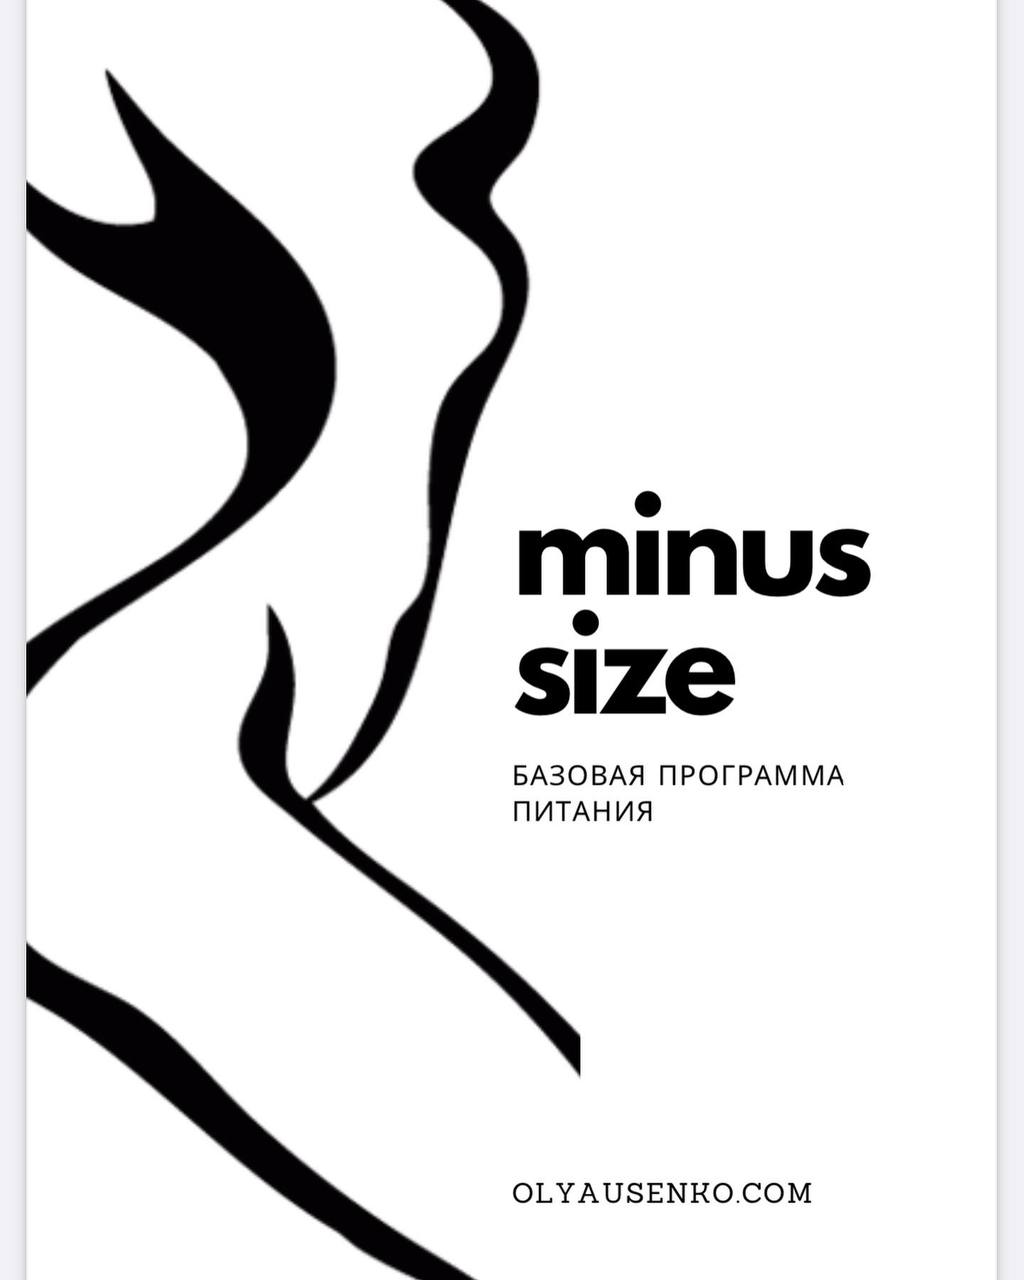 Minus Size